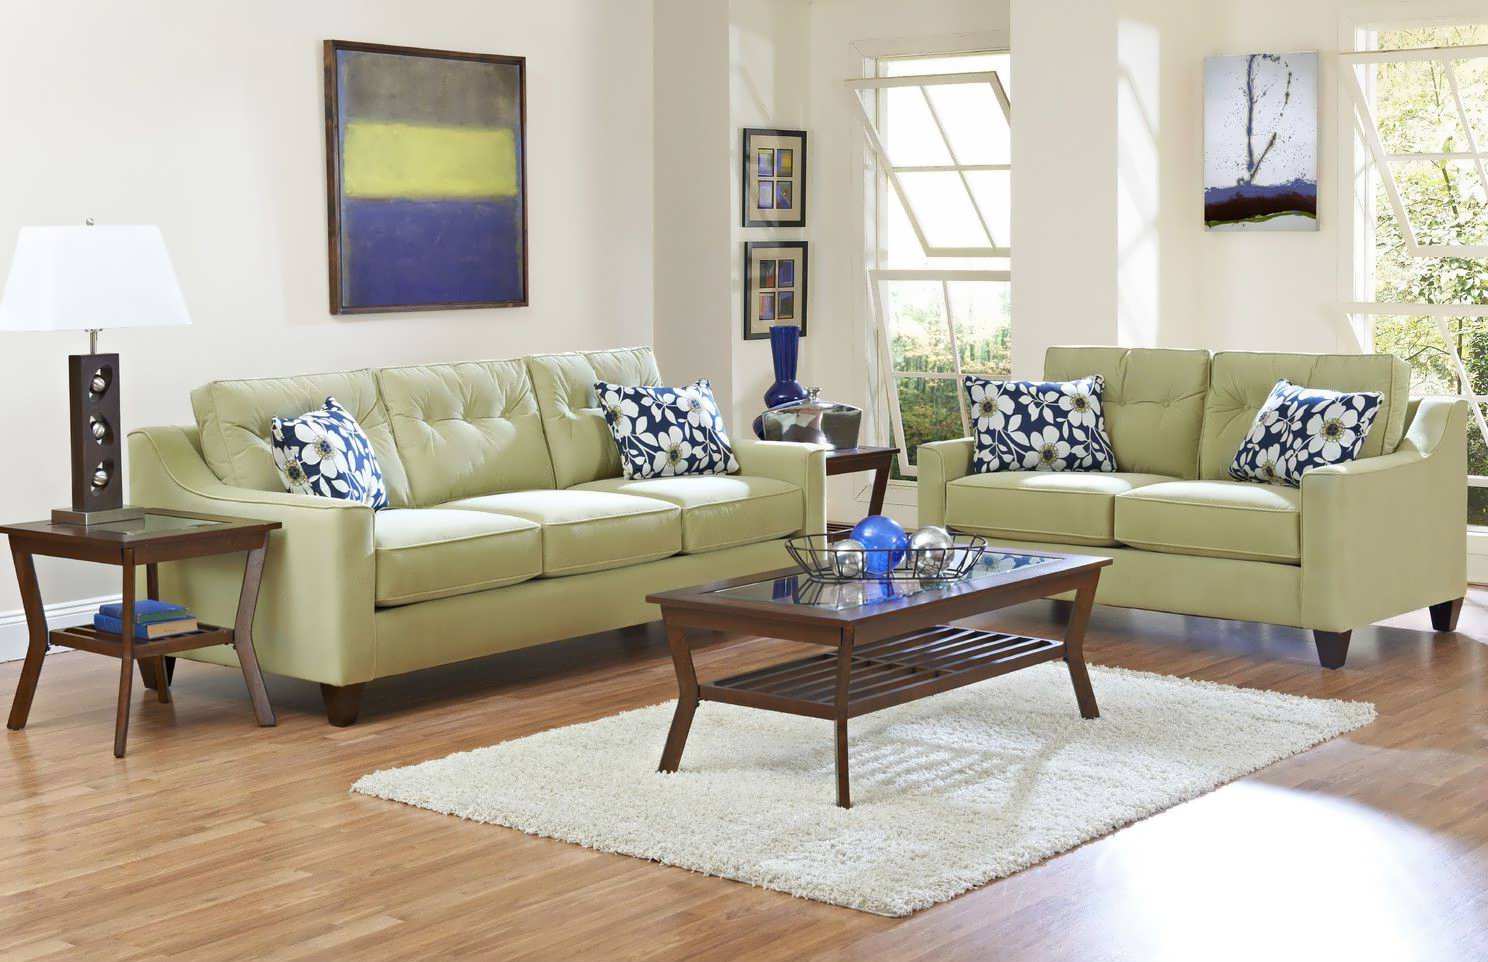 furniture for living room images